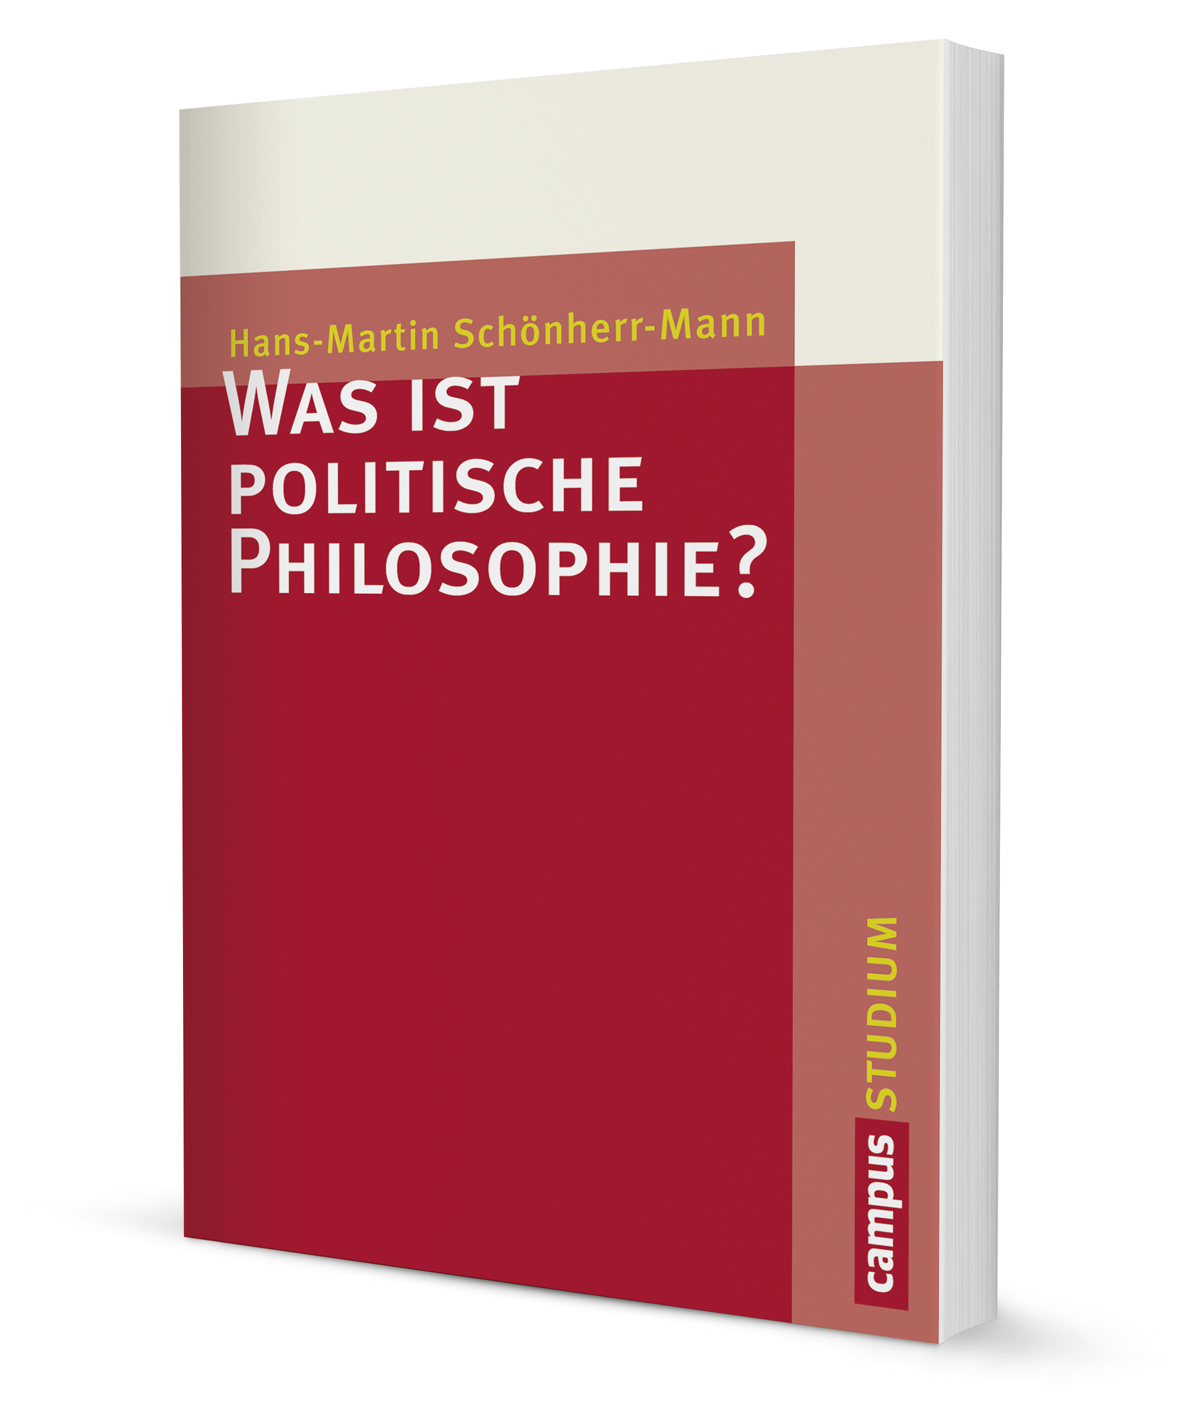 Was ist politische Philosophie?